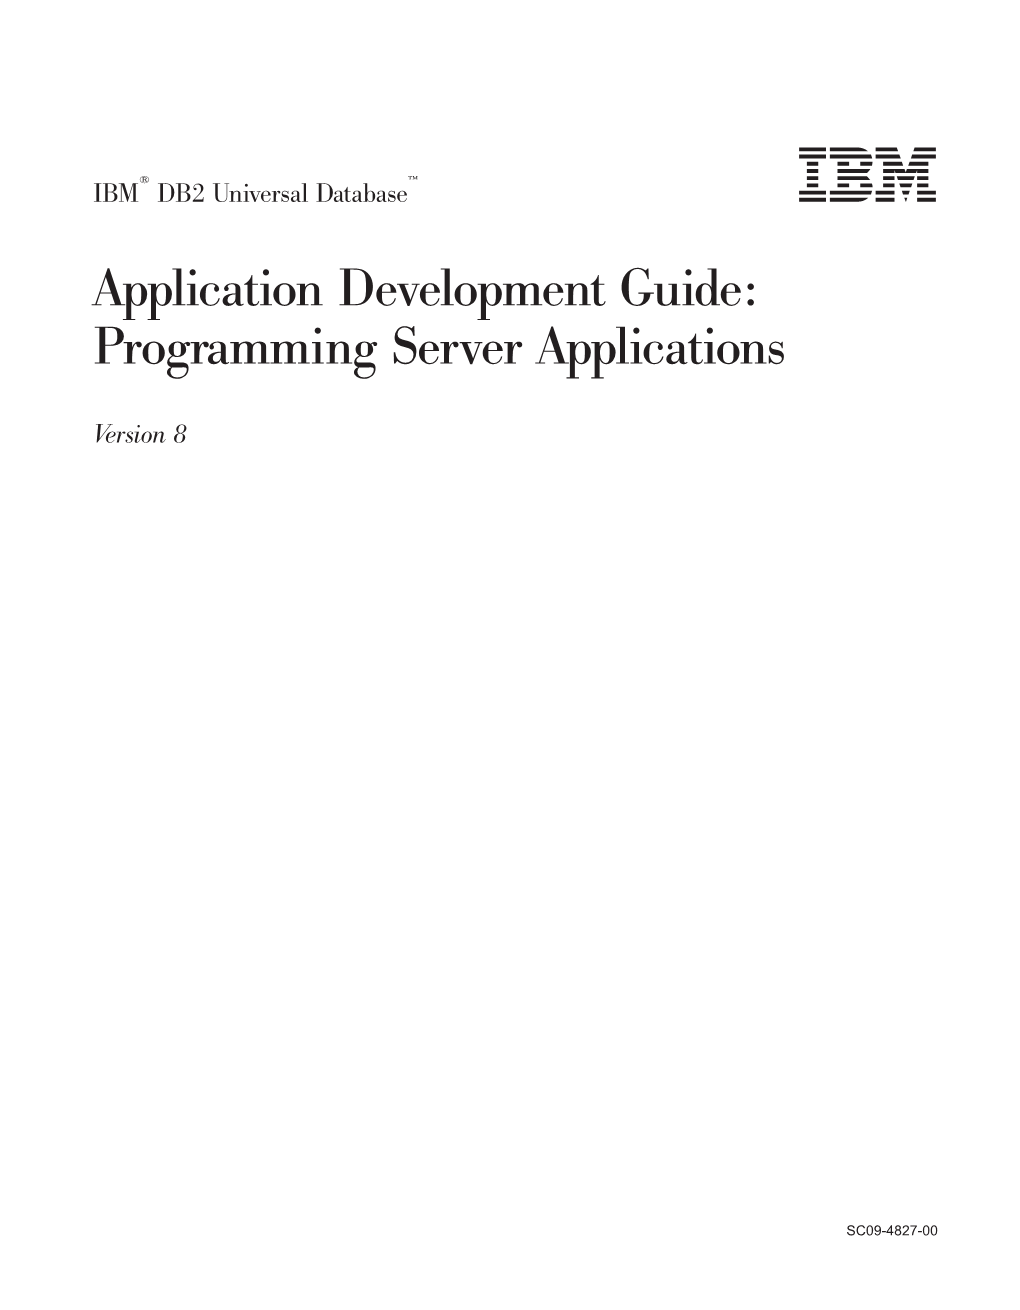 Programming Server Applications